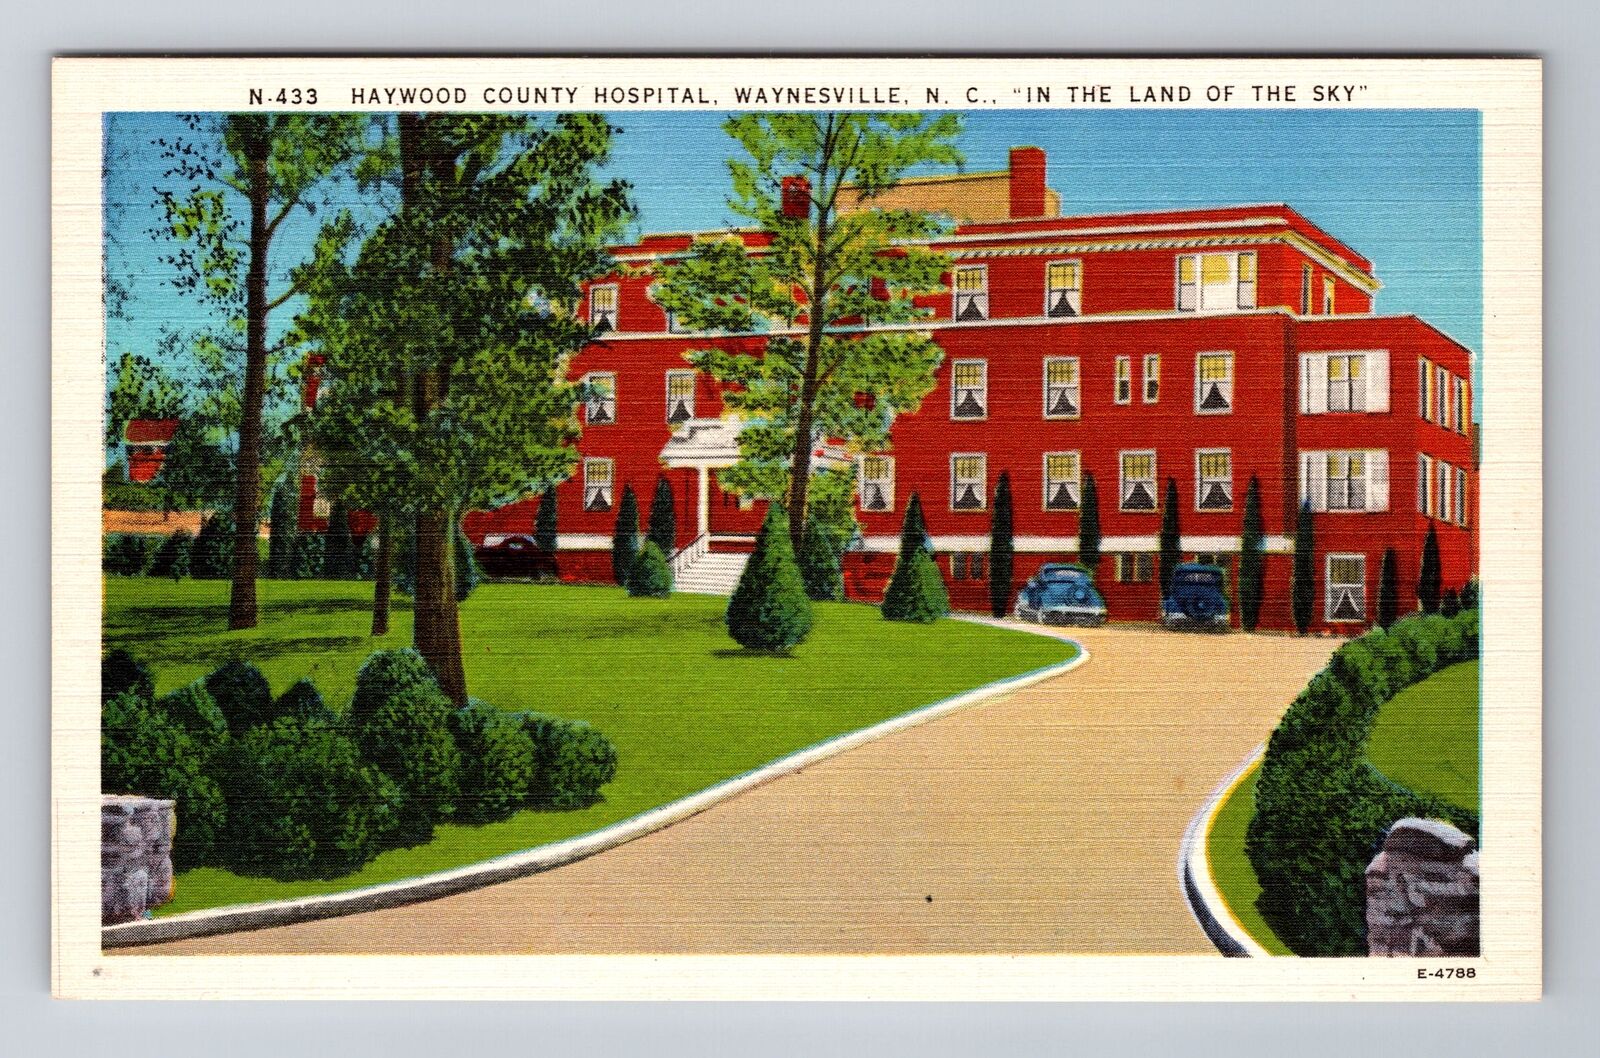 Waynesville NC-North Carolina, Haywood County Hospital Souvenir Vintage Postcard